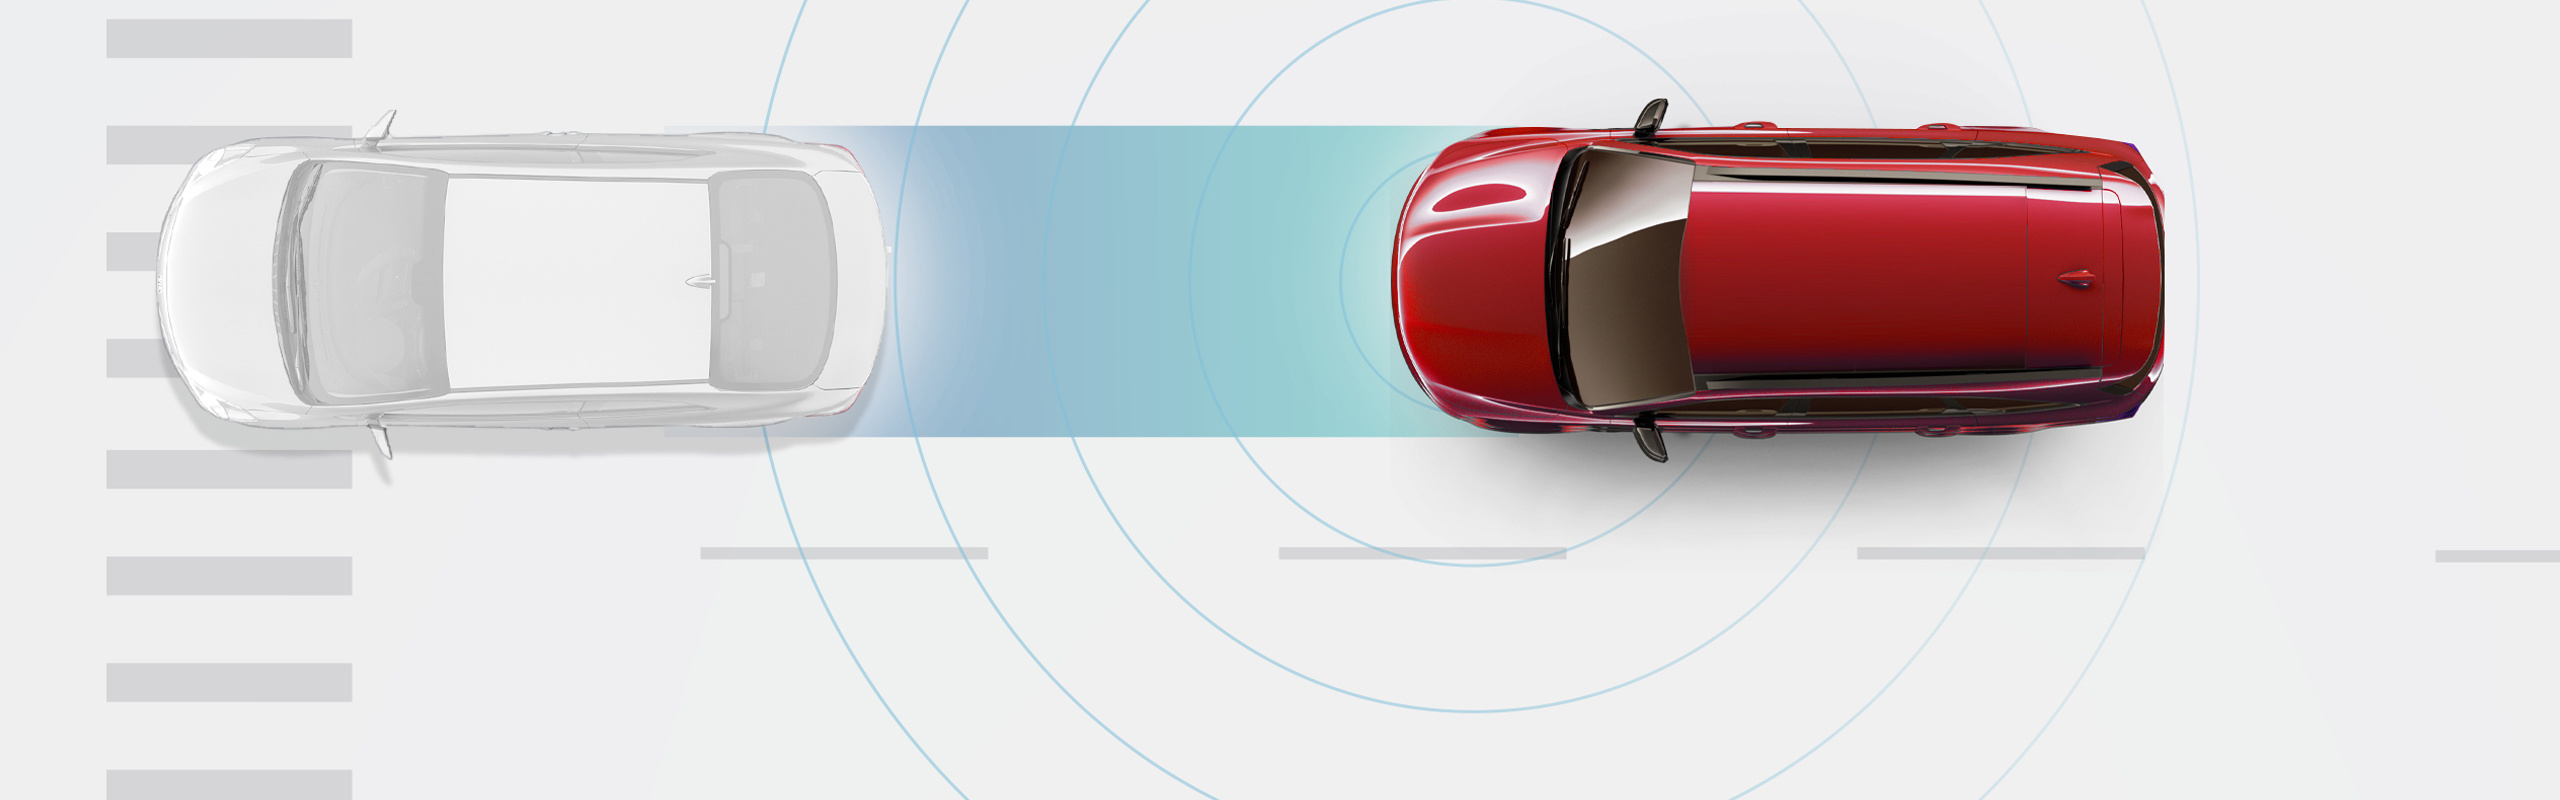 Kia Drive Wise forward collision avoidance assist visualization